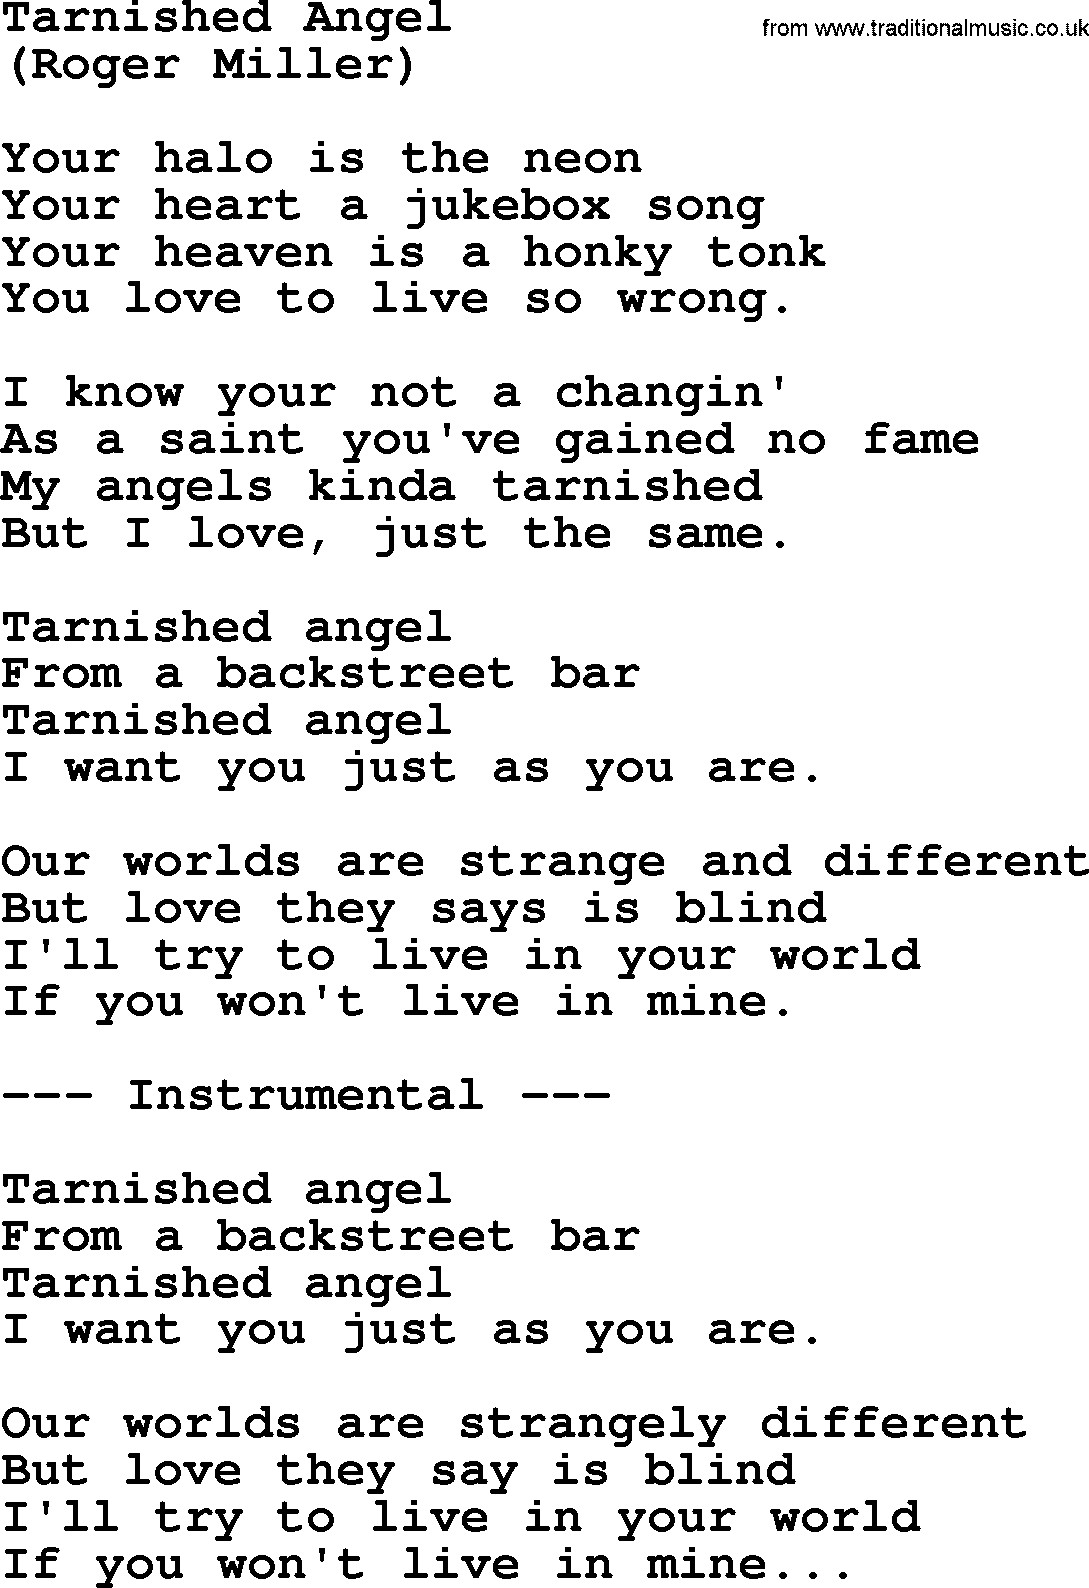 George Jones song: Tarnished Angel, lyrics